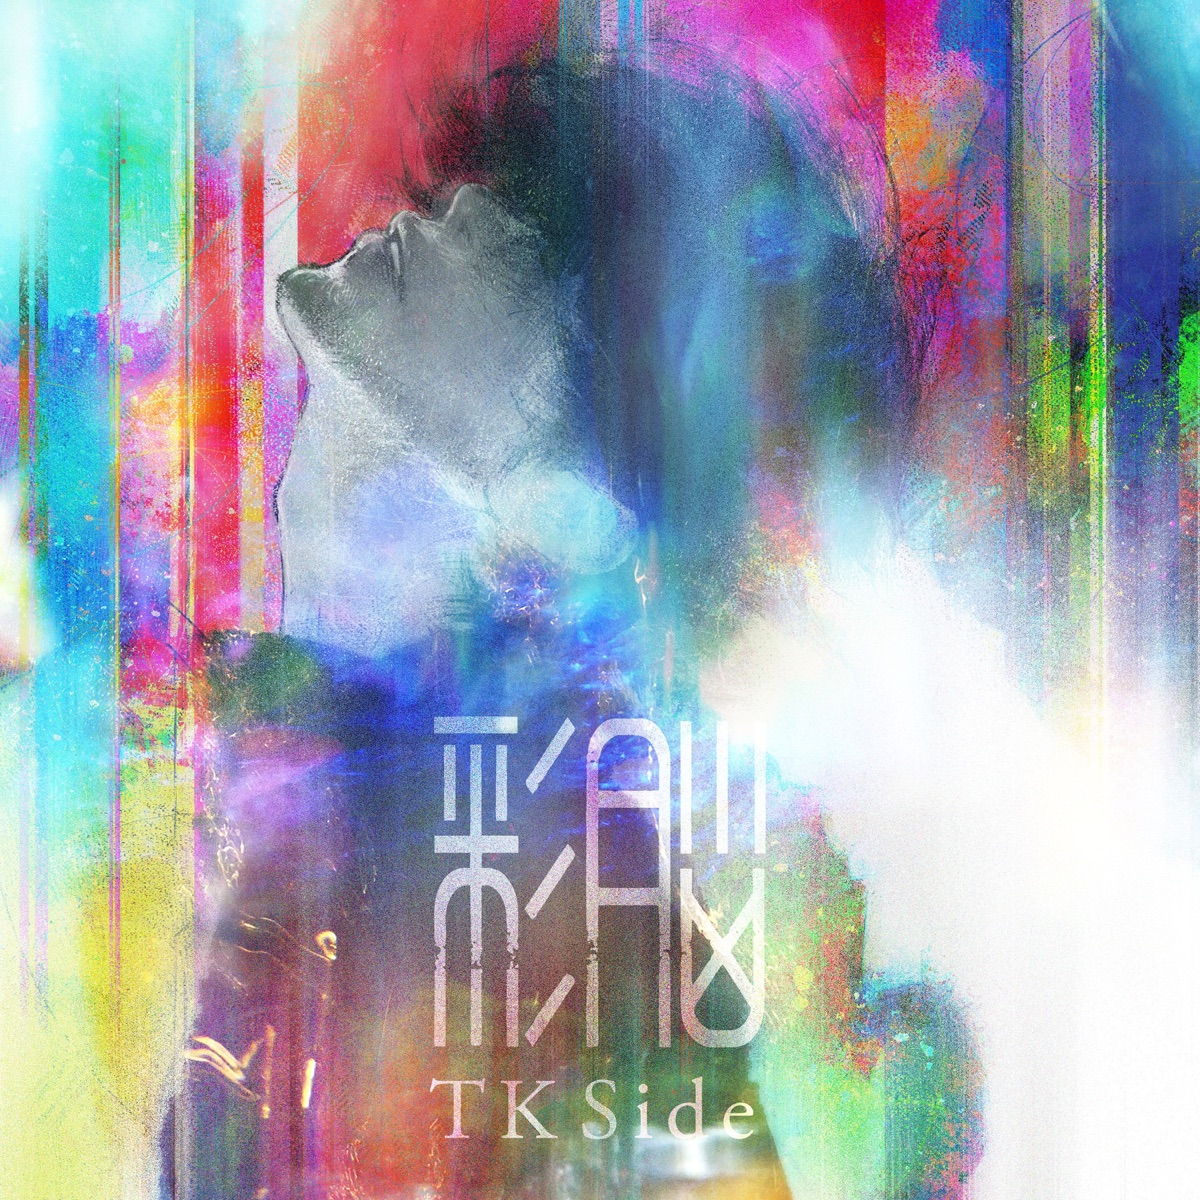 Cover art for『TK from Ling tosite sigure - Sainou -TK Side-』from the release『Sainou -TK Side-』